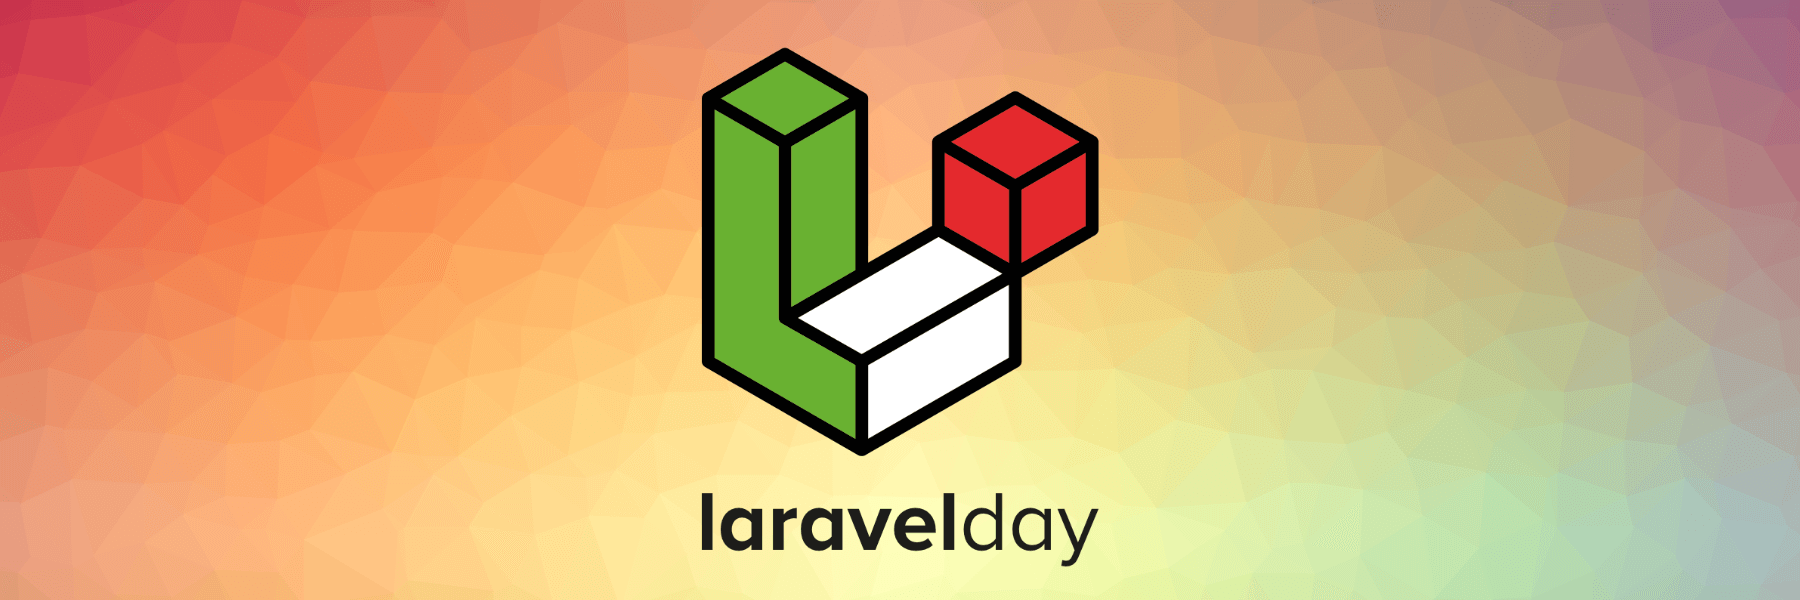 Laravel Day 2021 cover image